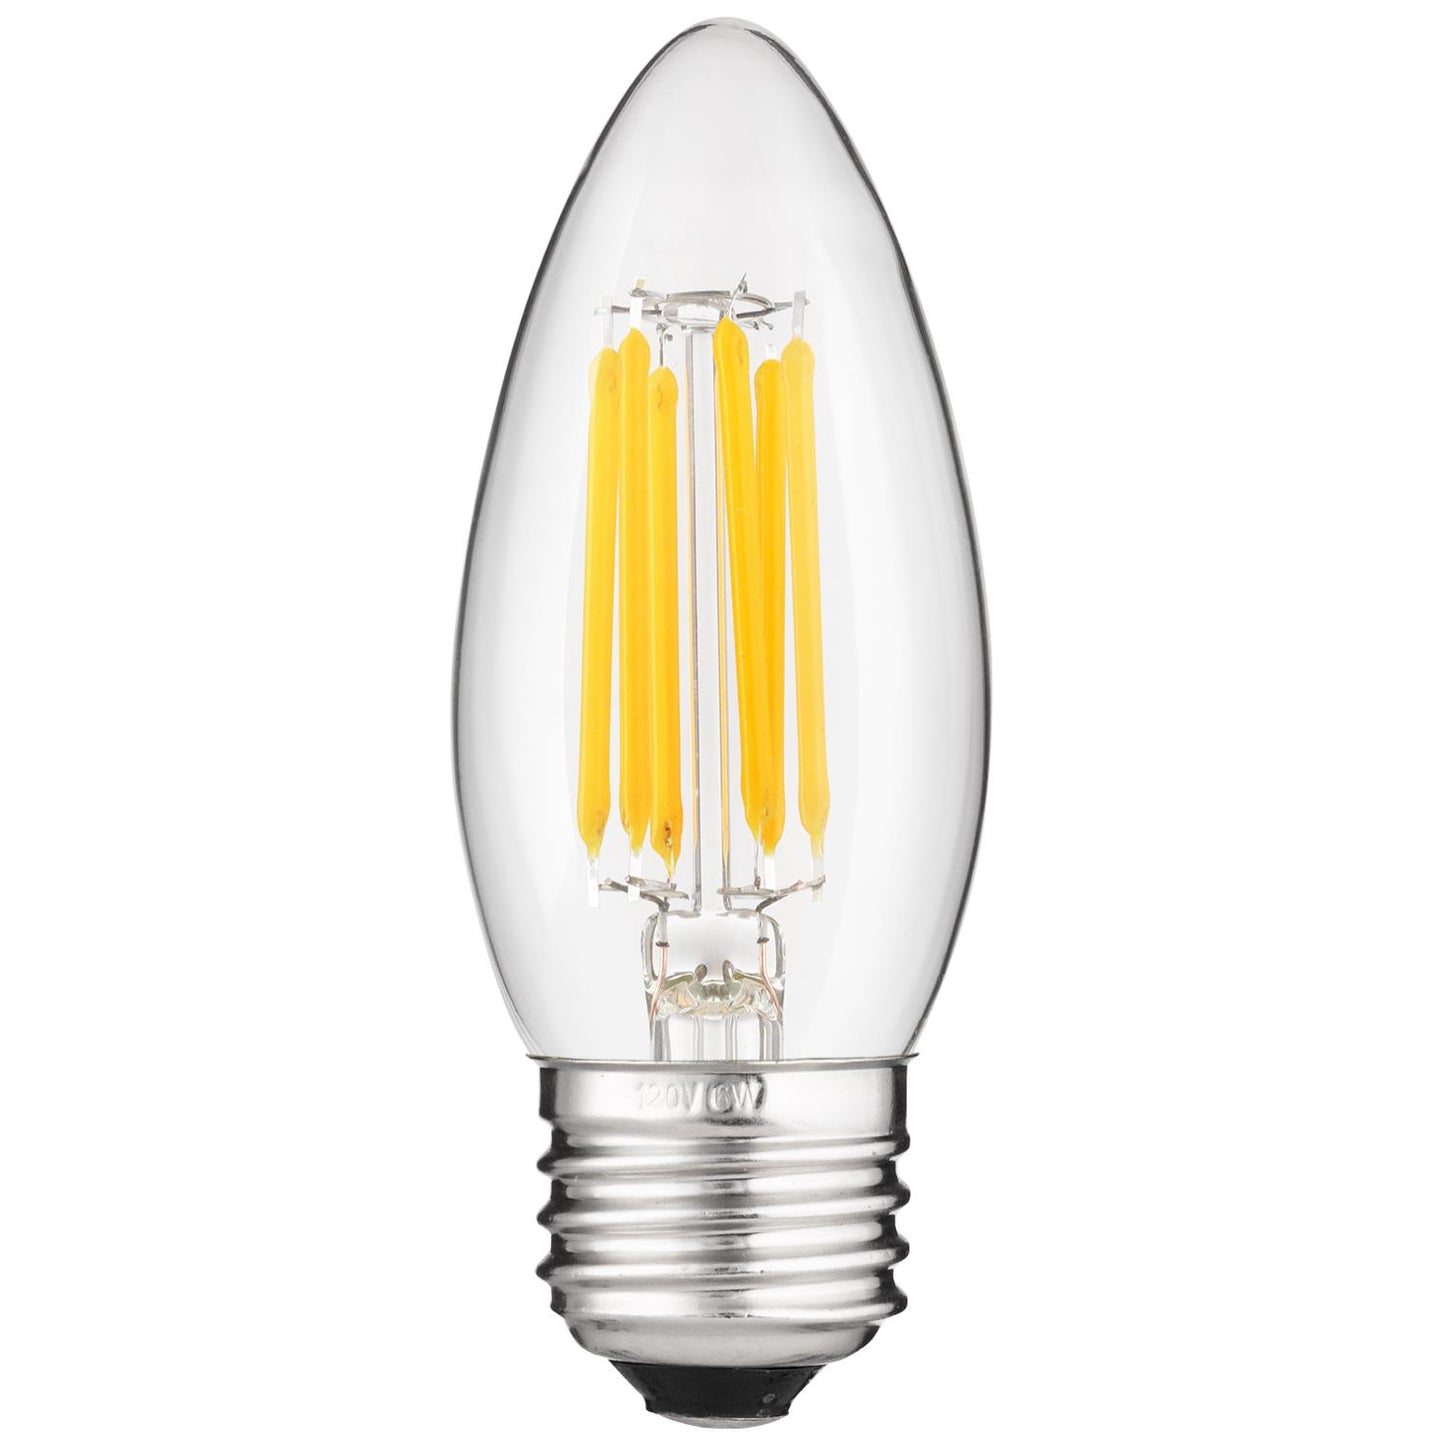 Sunlite 80658 LED Filament B11 Torpedo Tip Chandelier 5-Watt Clear Dimmable Light Bulb, 2700K - Warm White